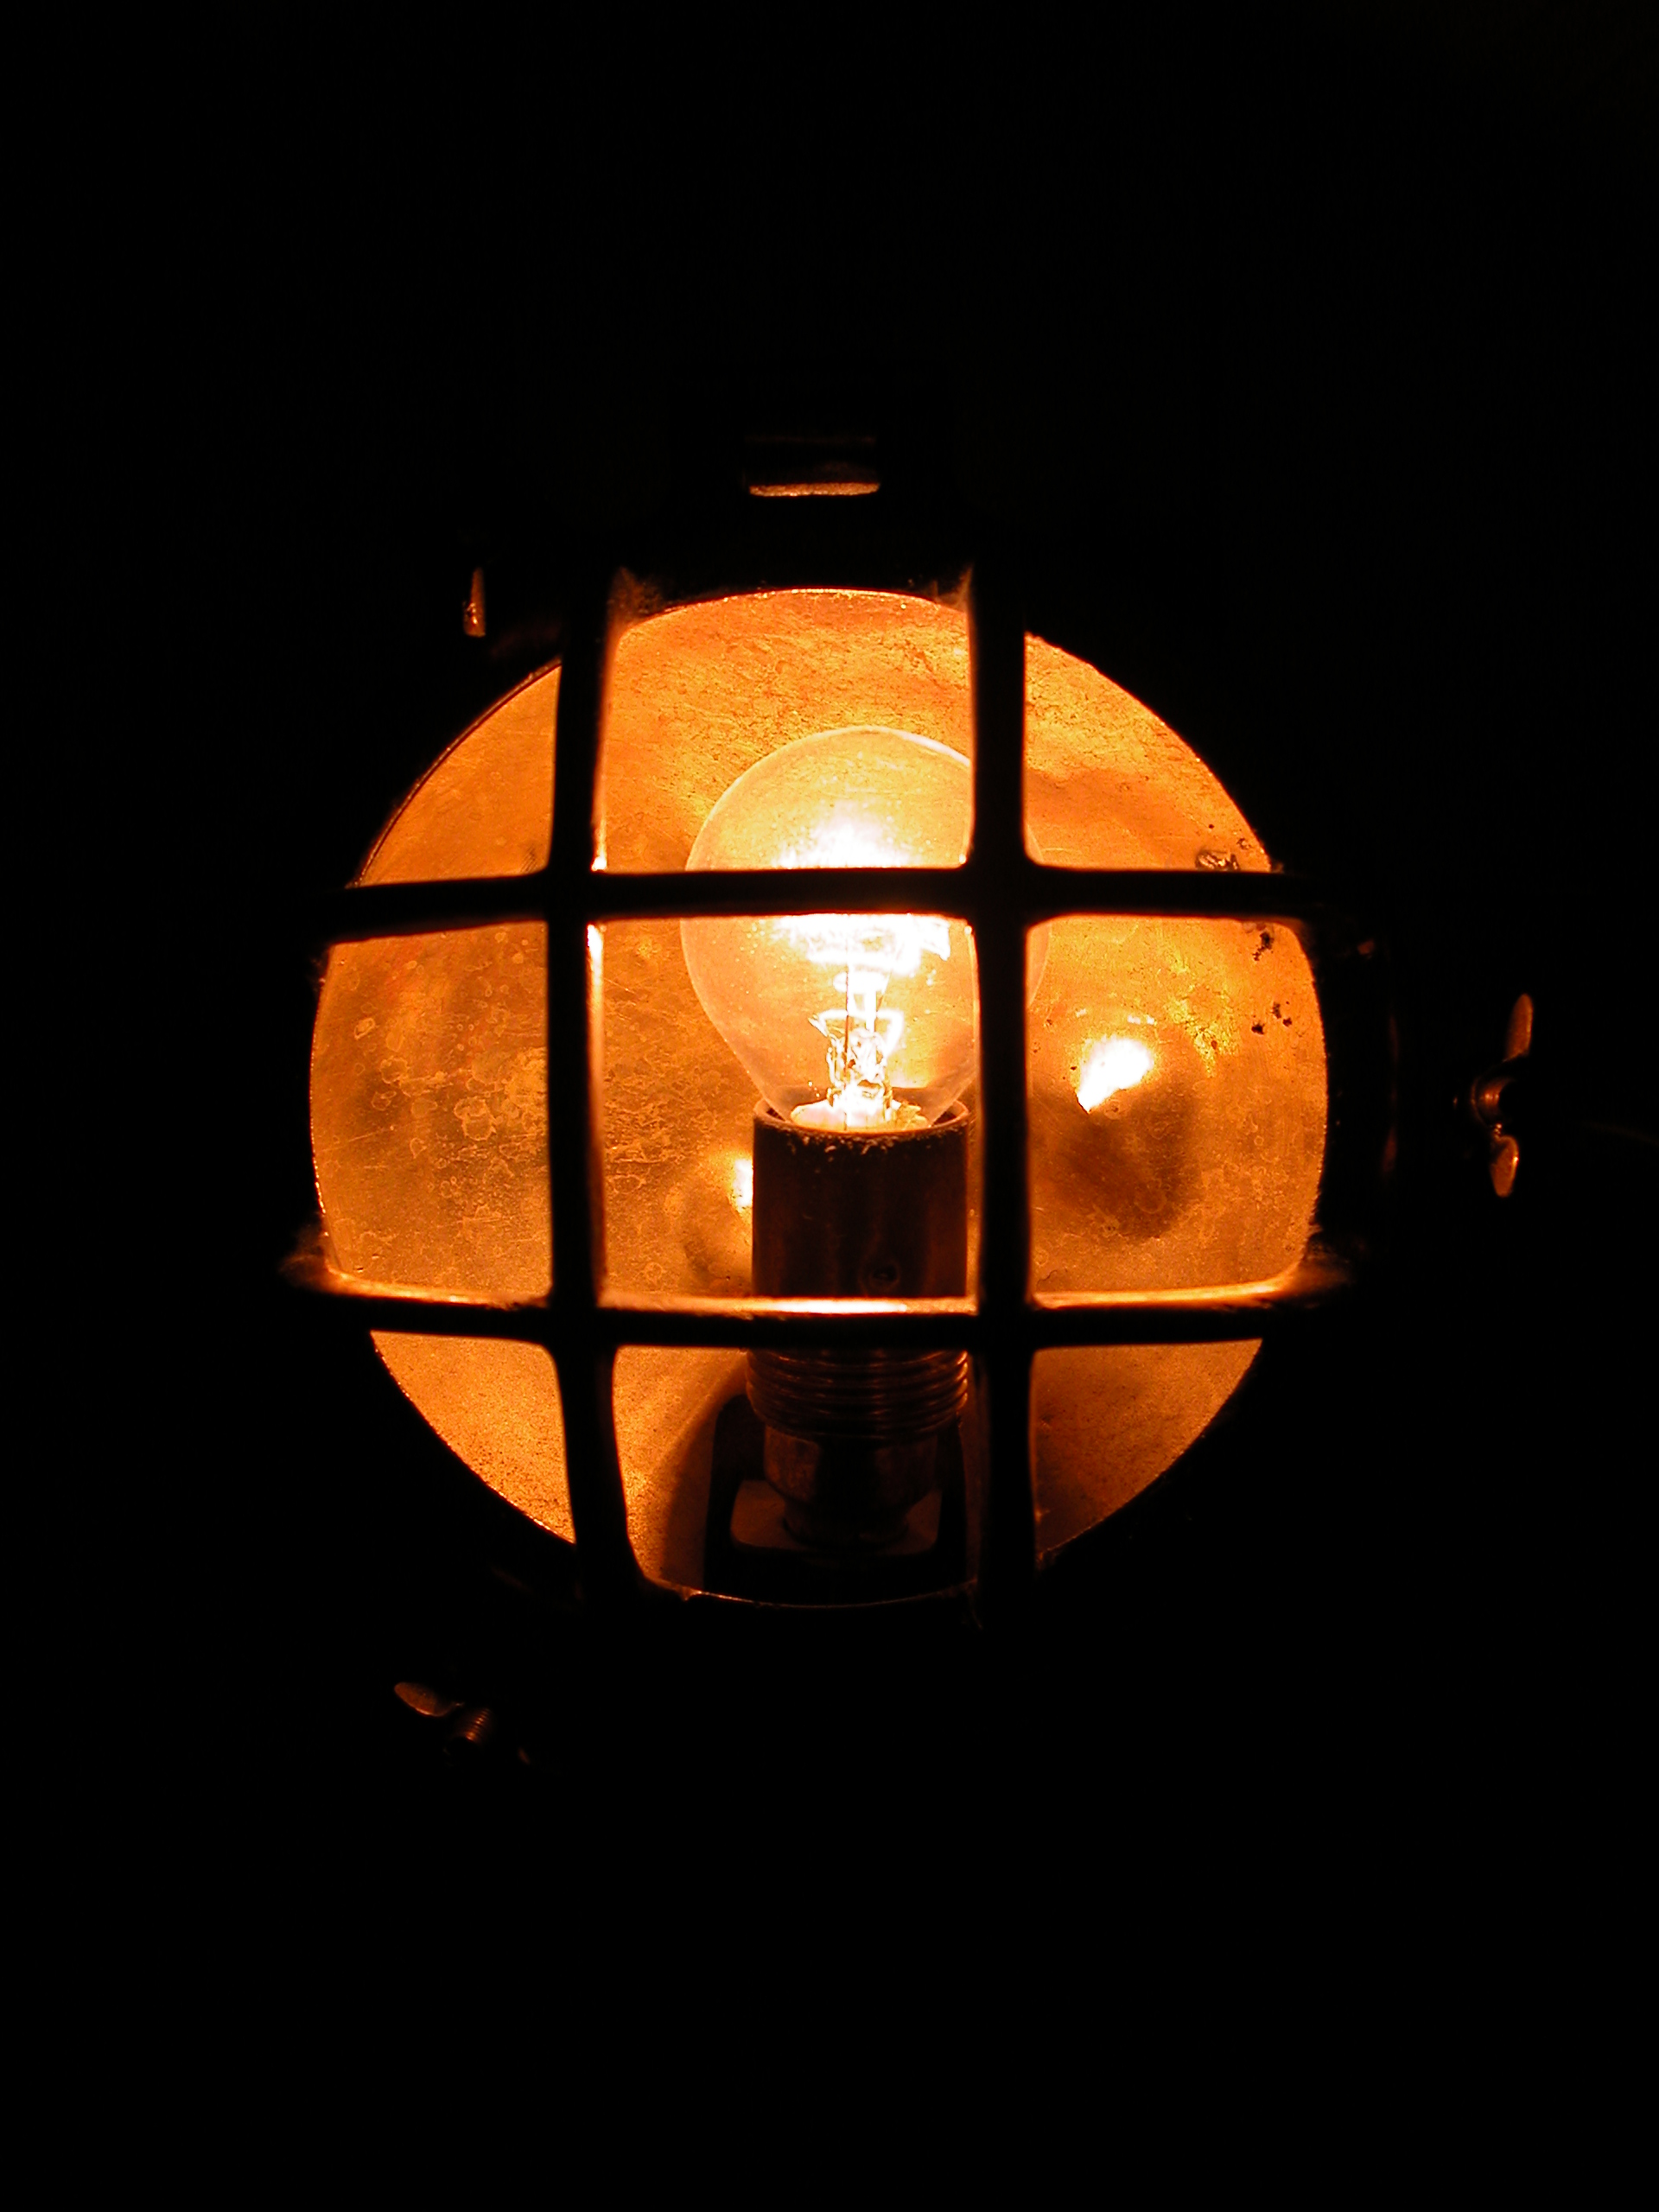 Image*After : photos : lamps light bulb